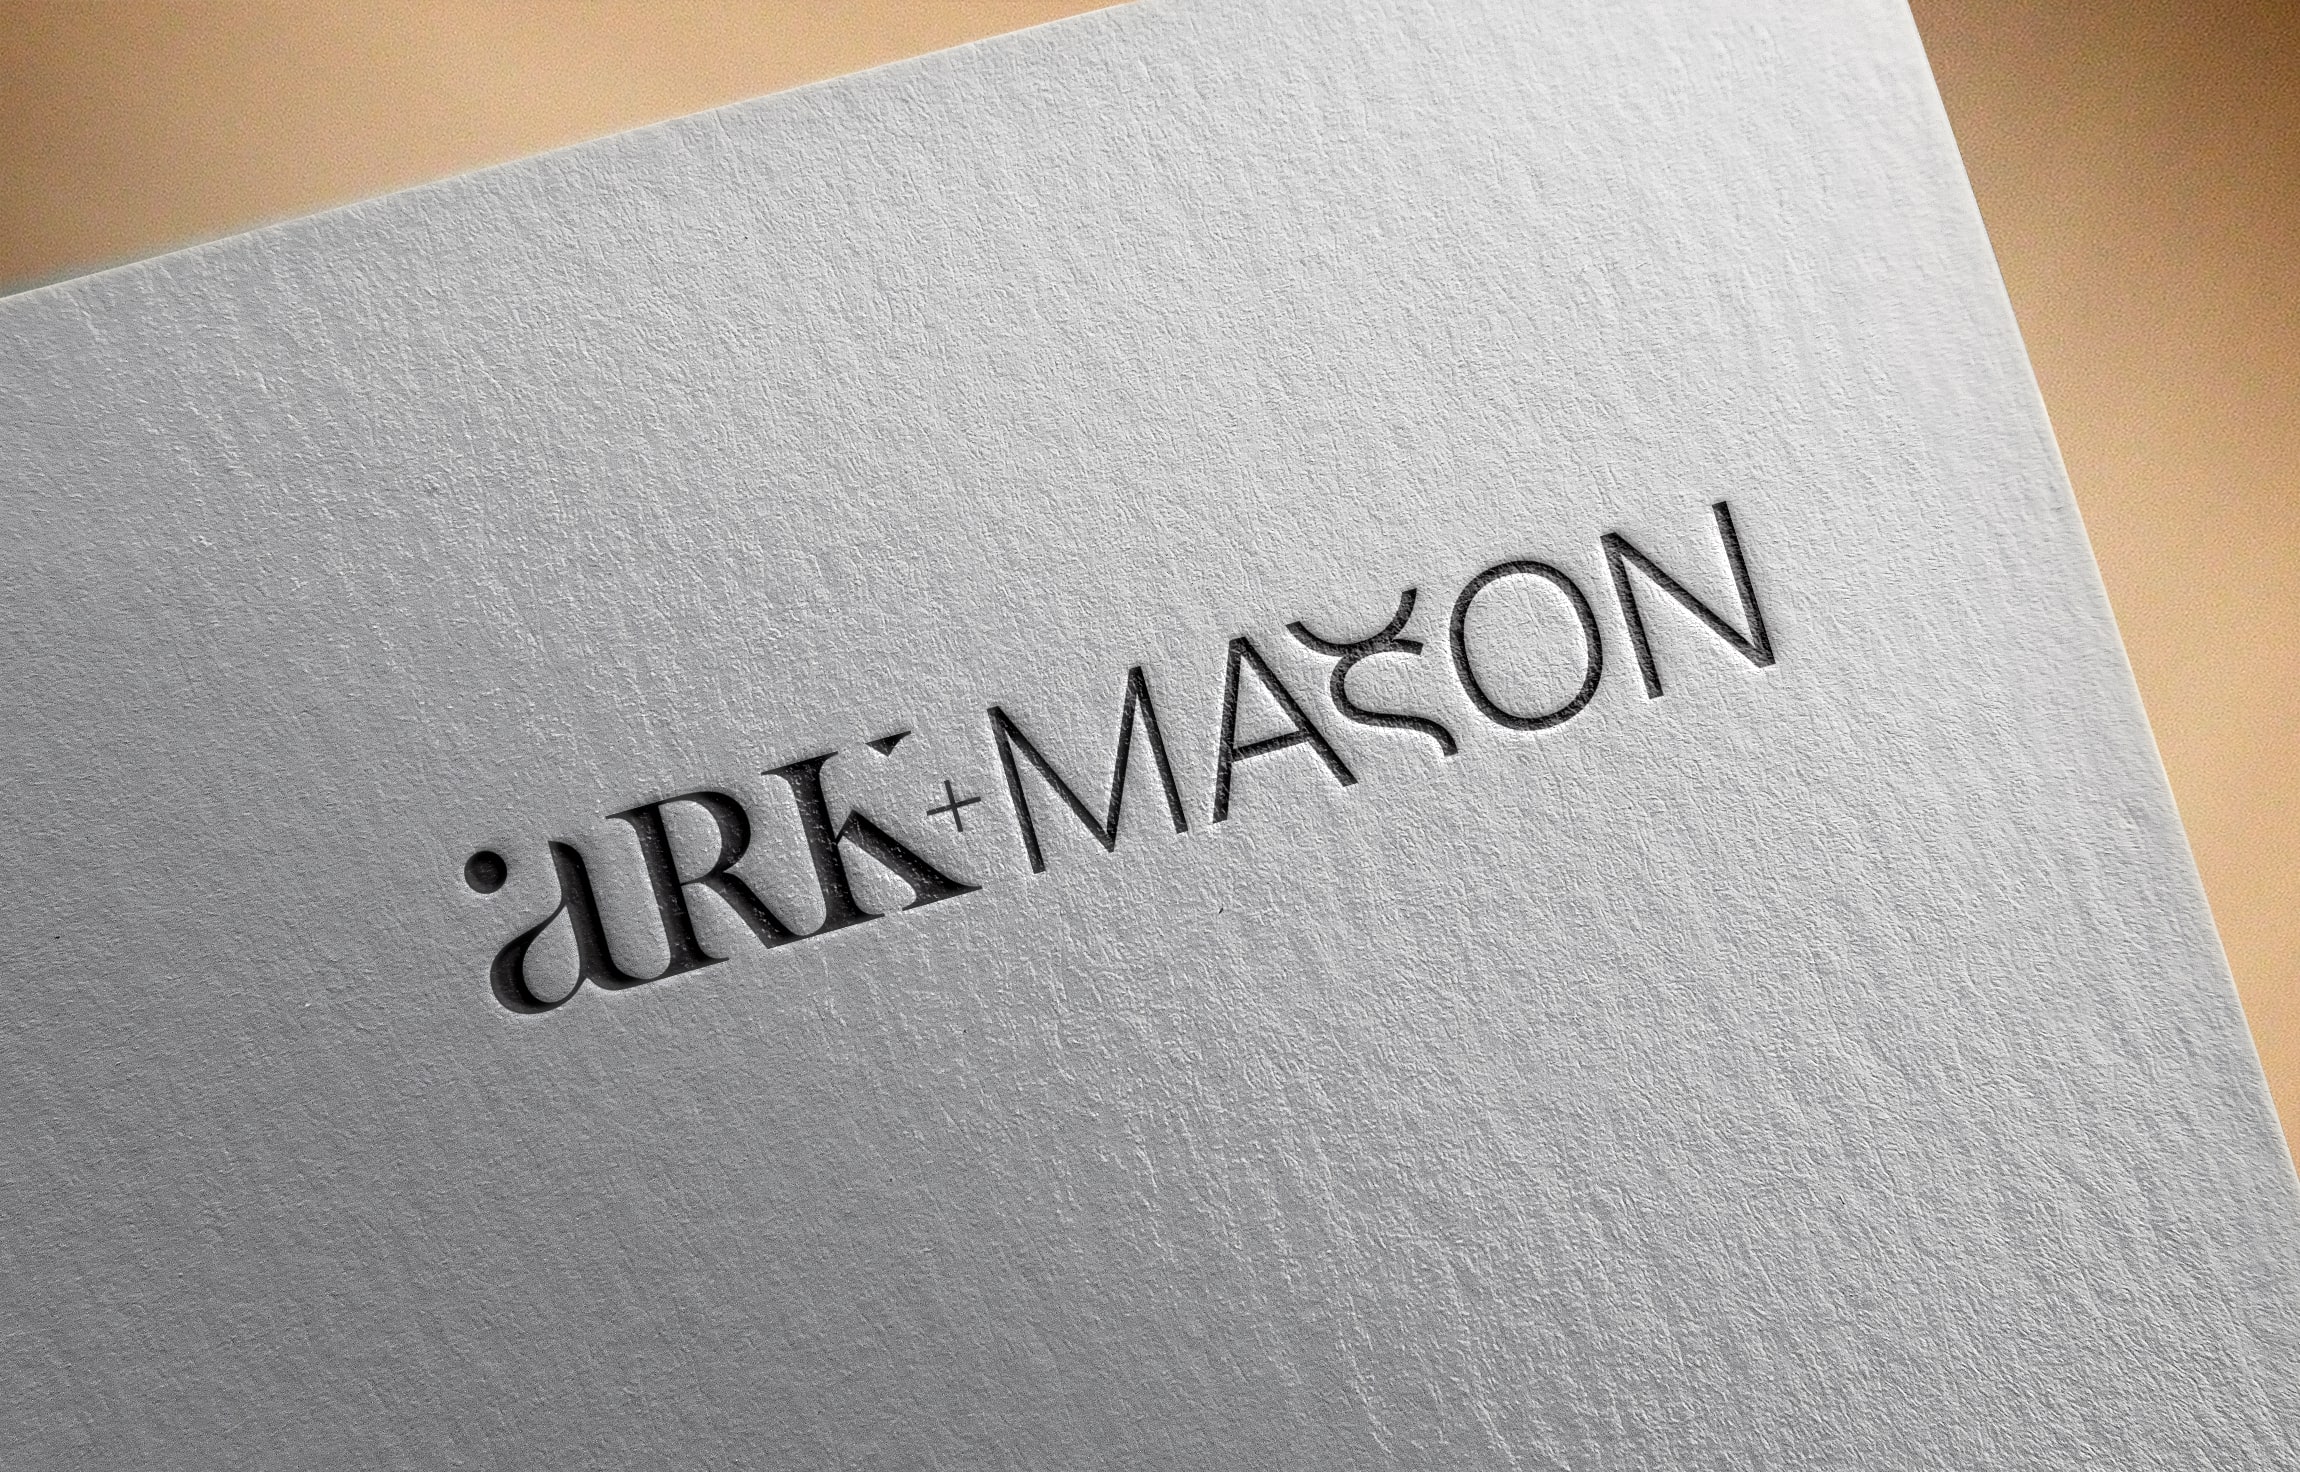 Ark + Mason